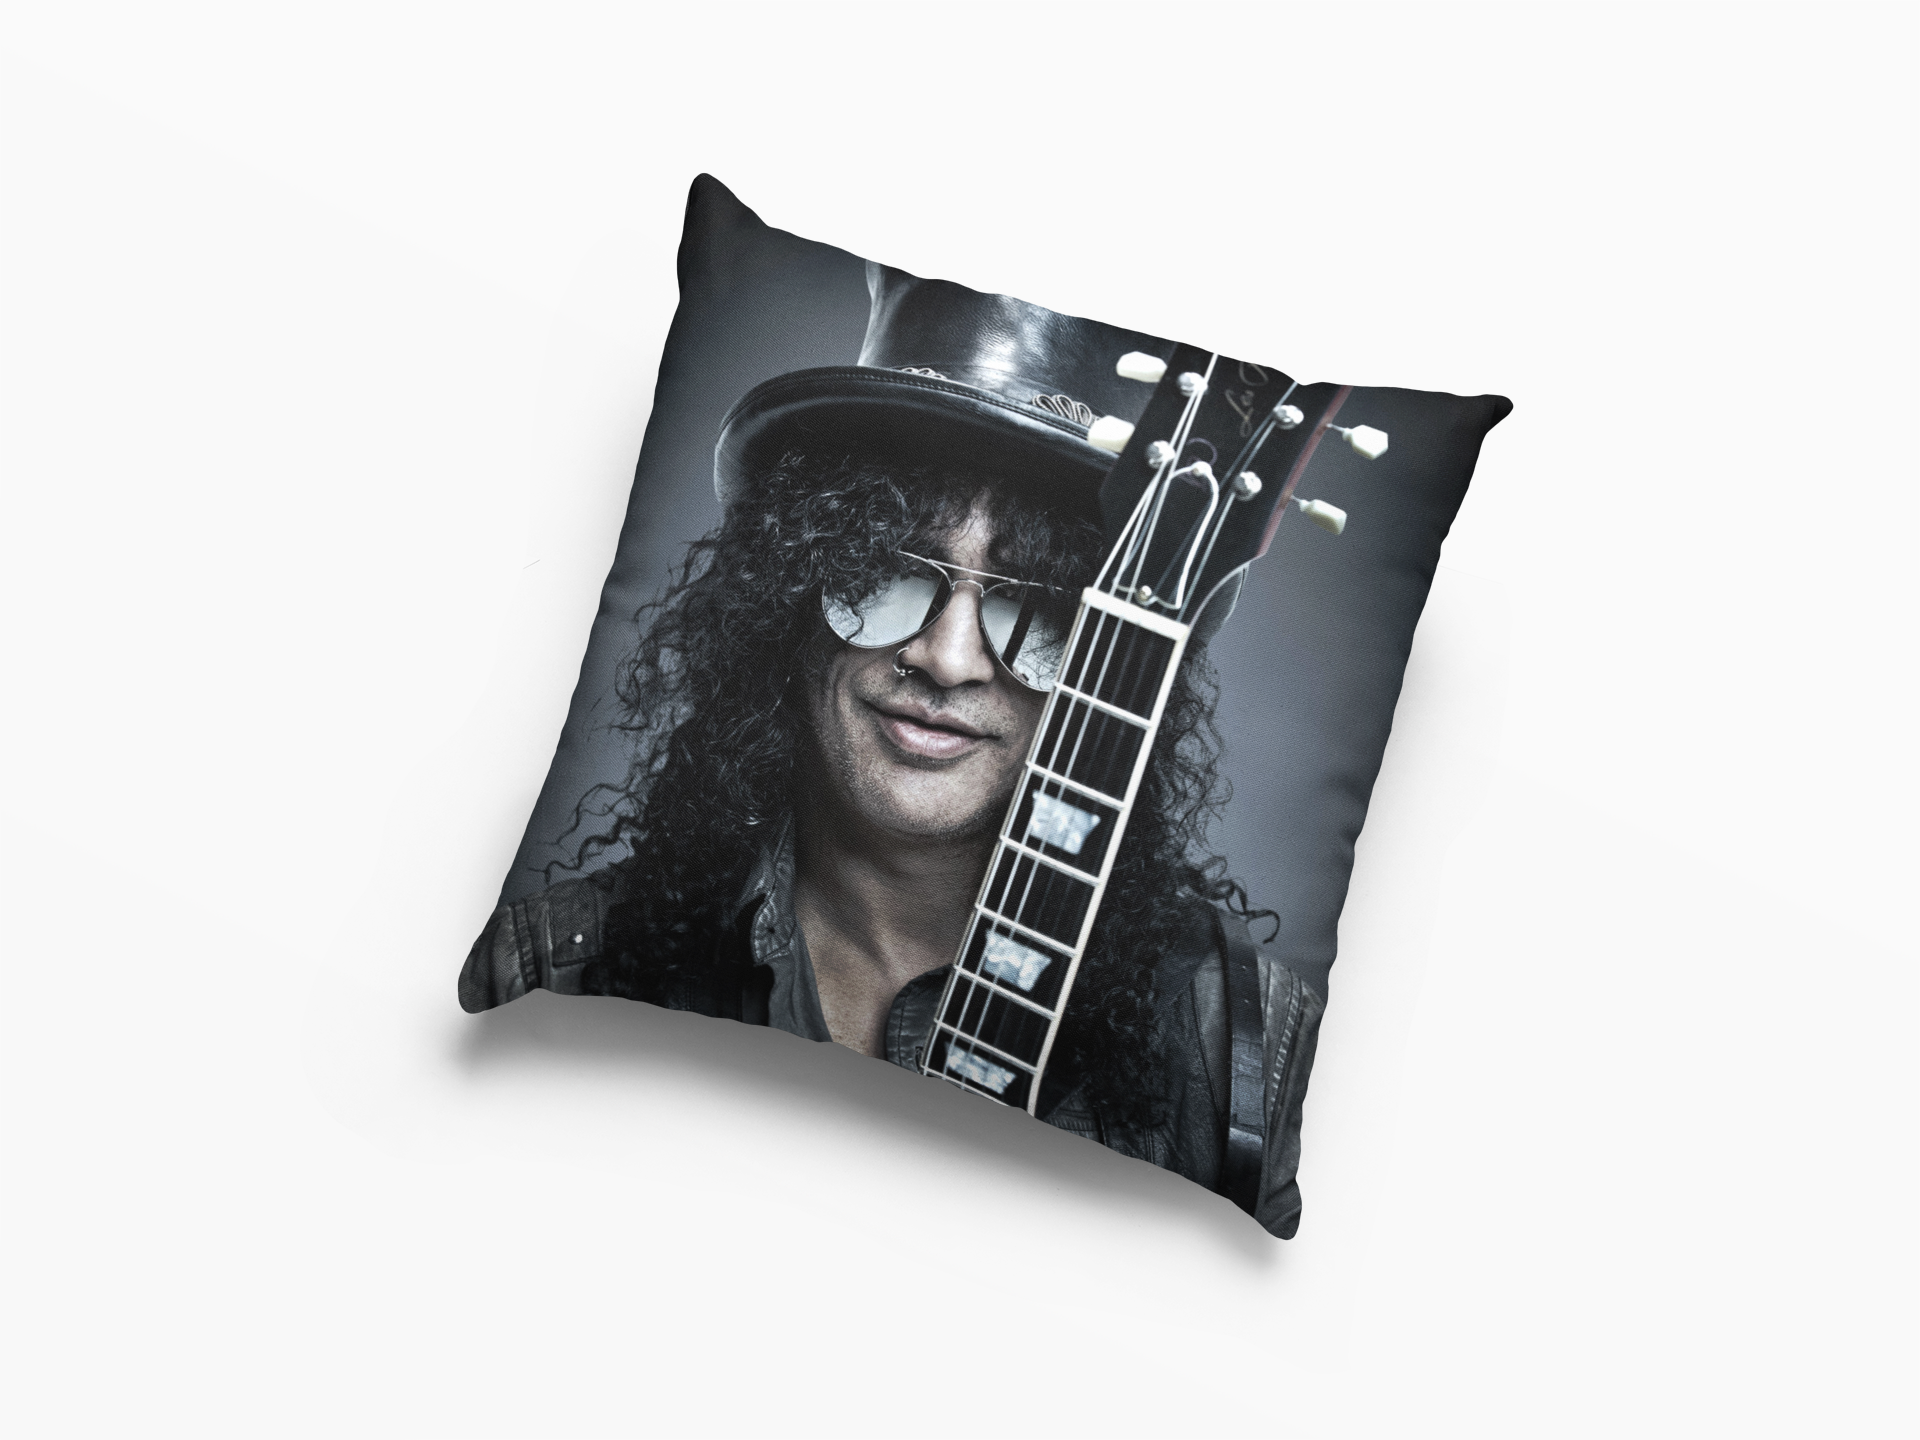 Slash Style Cushion Case / Pillow Case